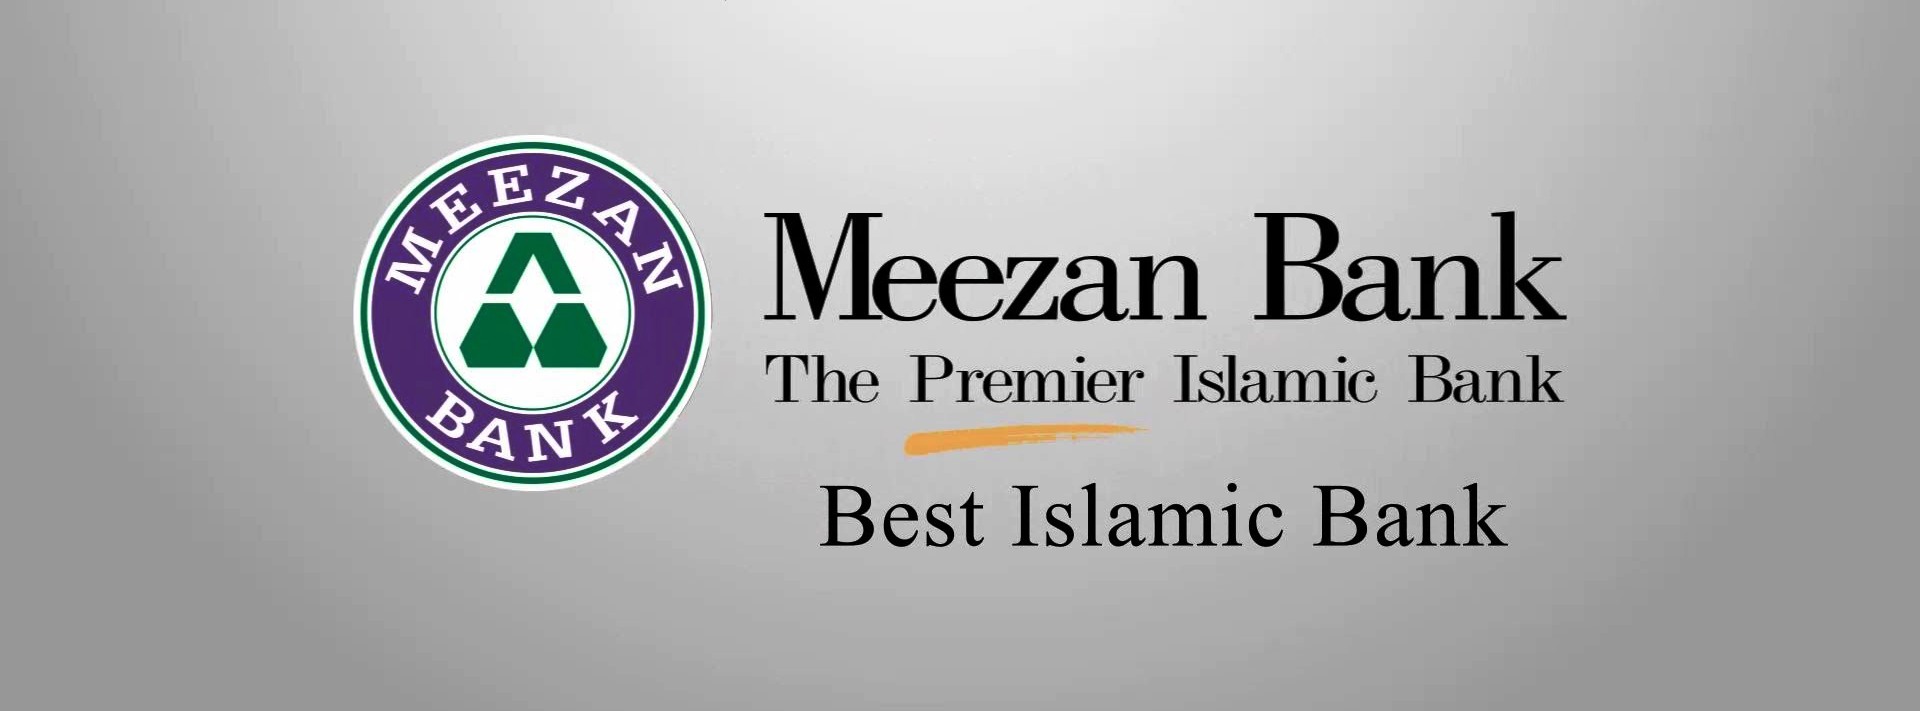 Meezan-bank-logo-2017